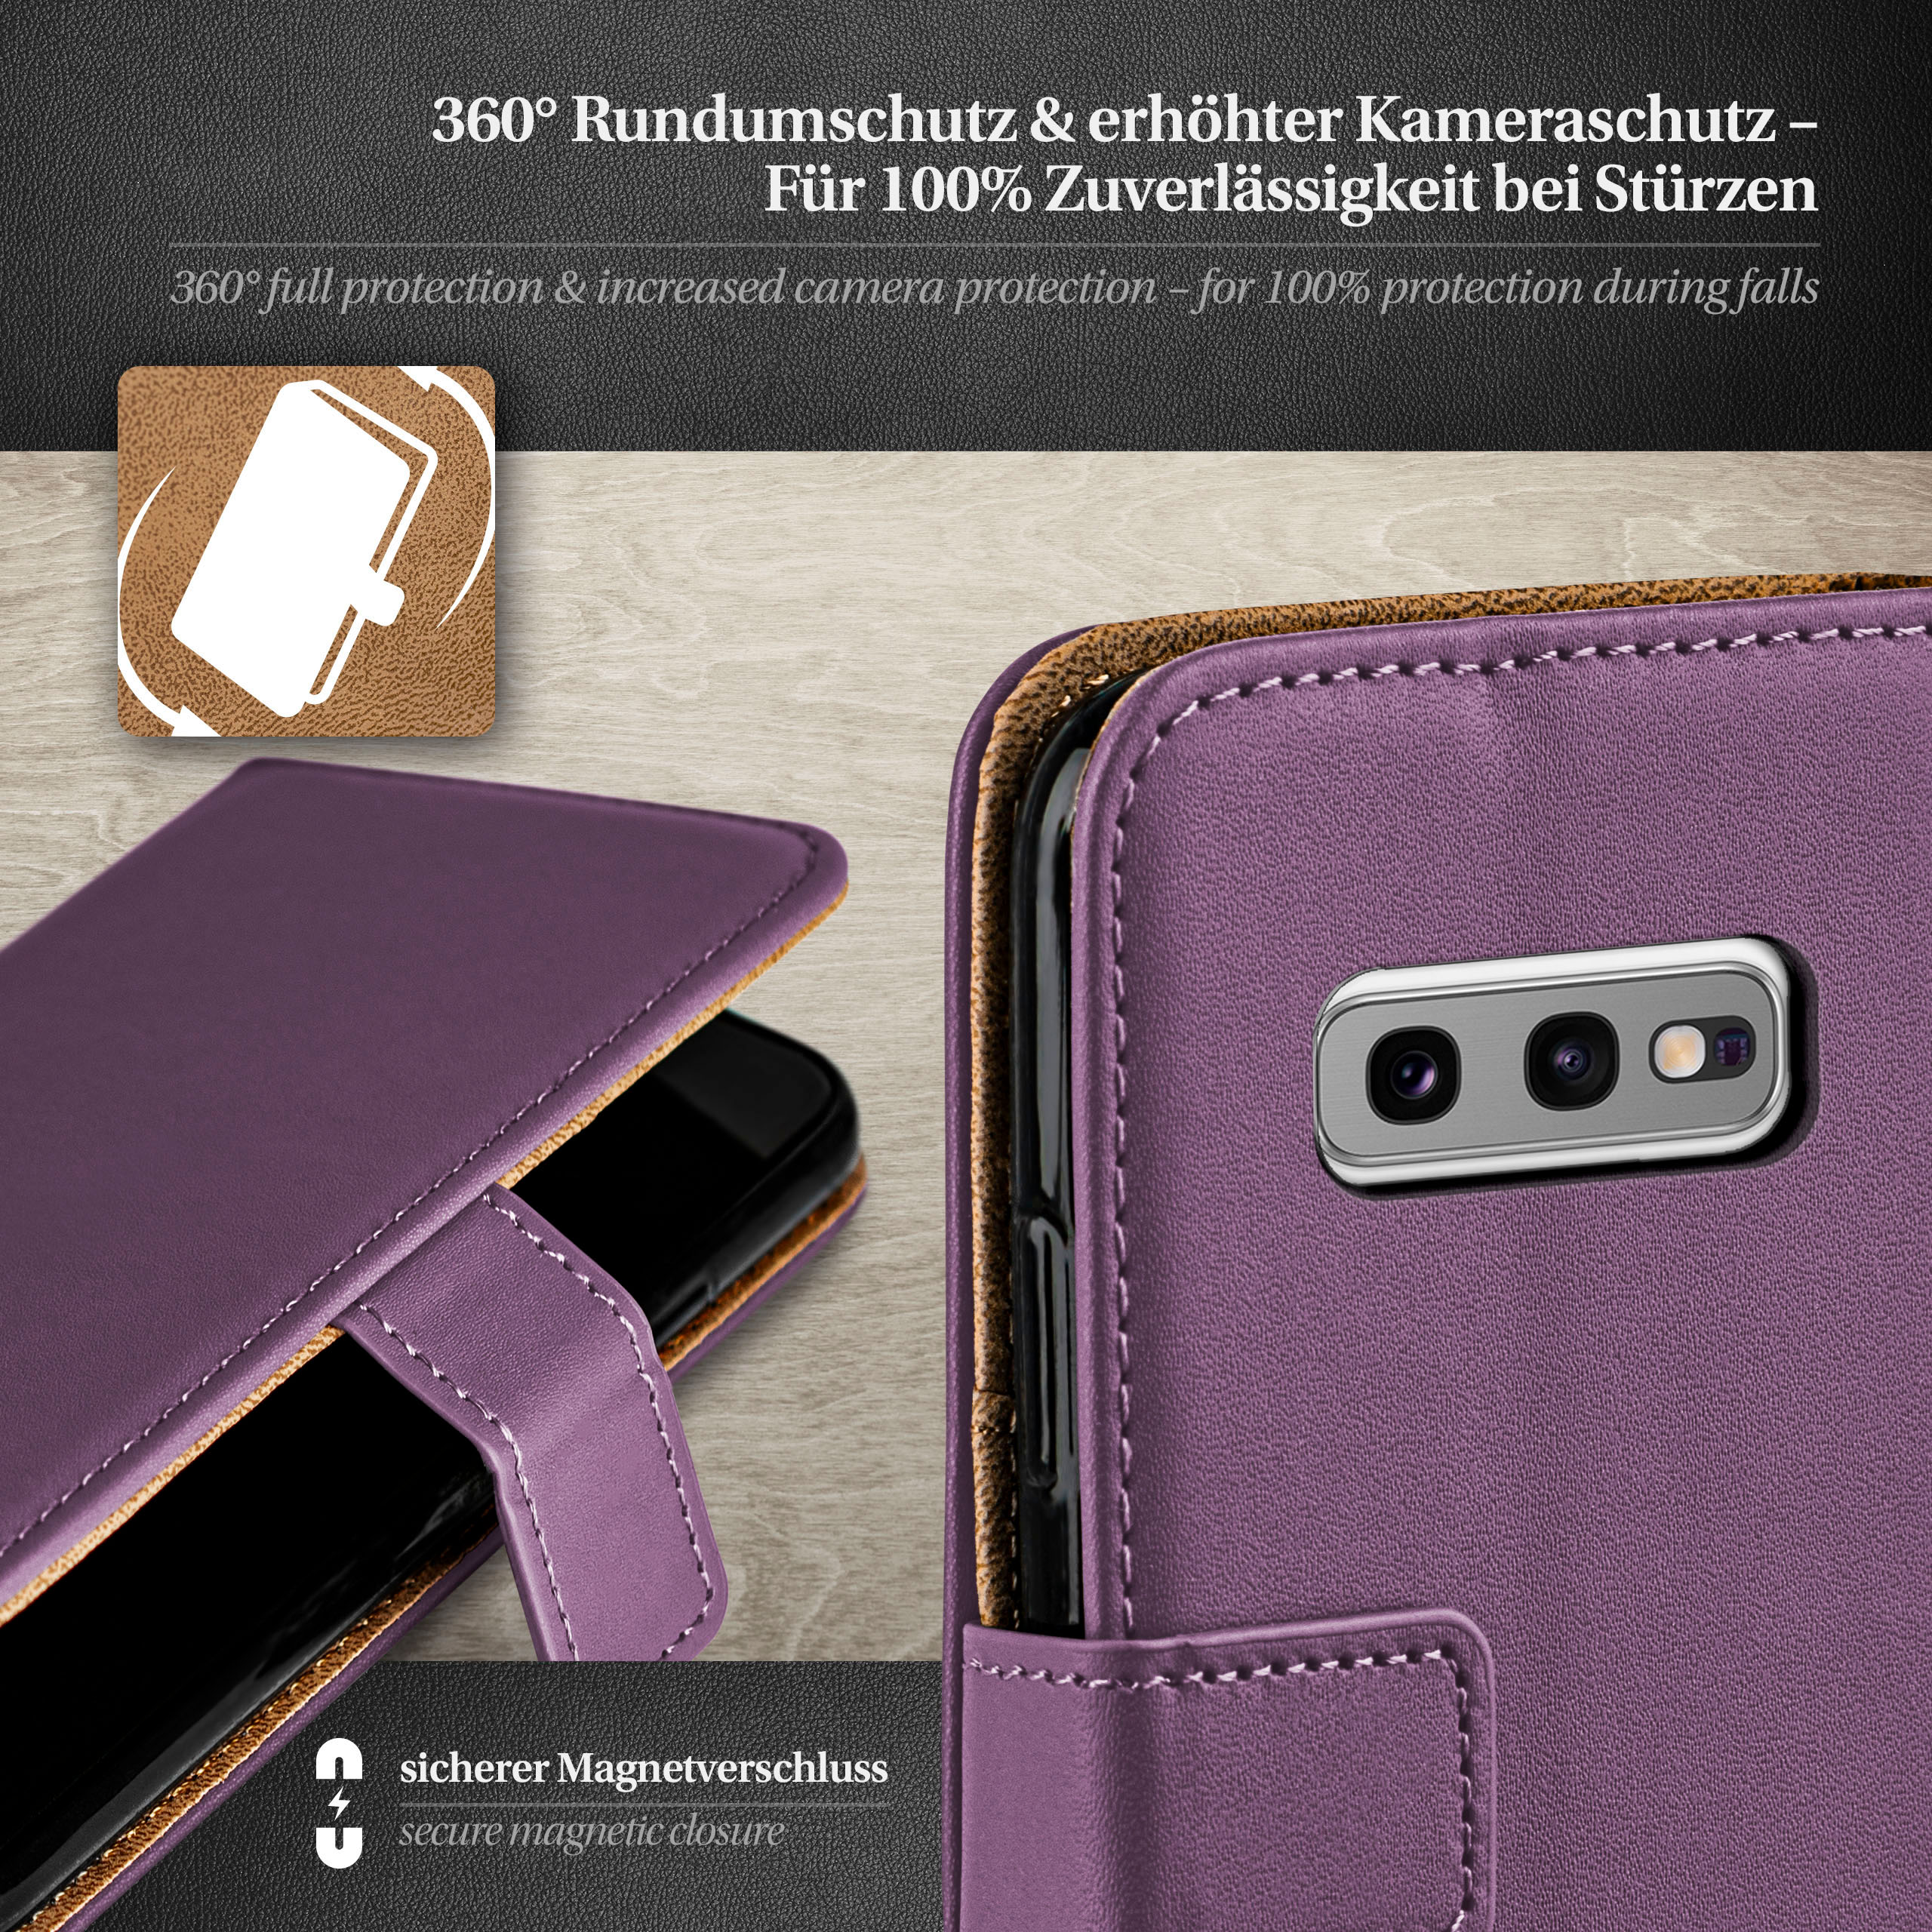 Indigo-Violet MOEX S10e, Samsung, Case, Bookcover, Book Galaxy